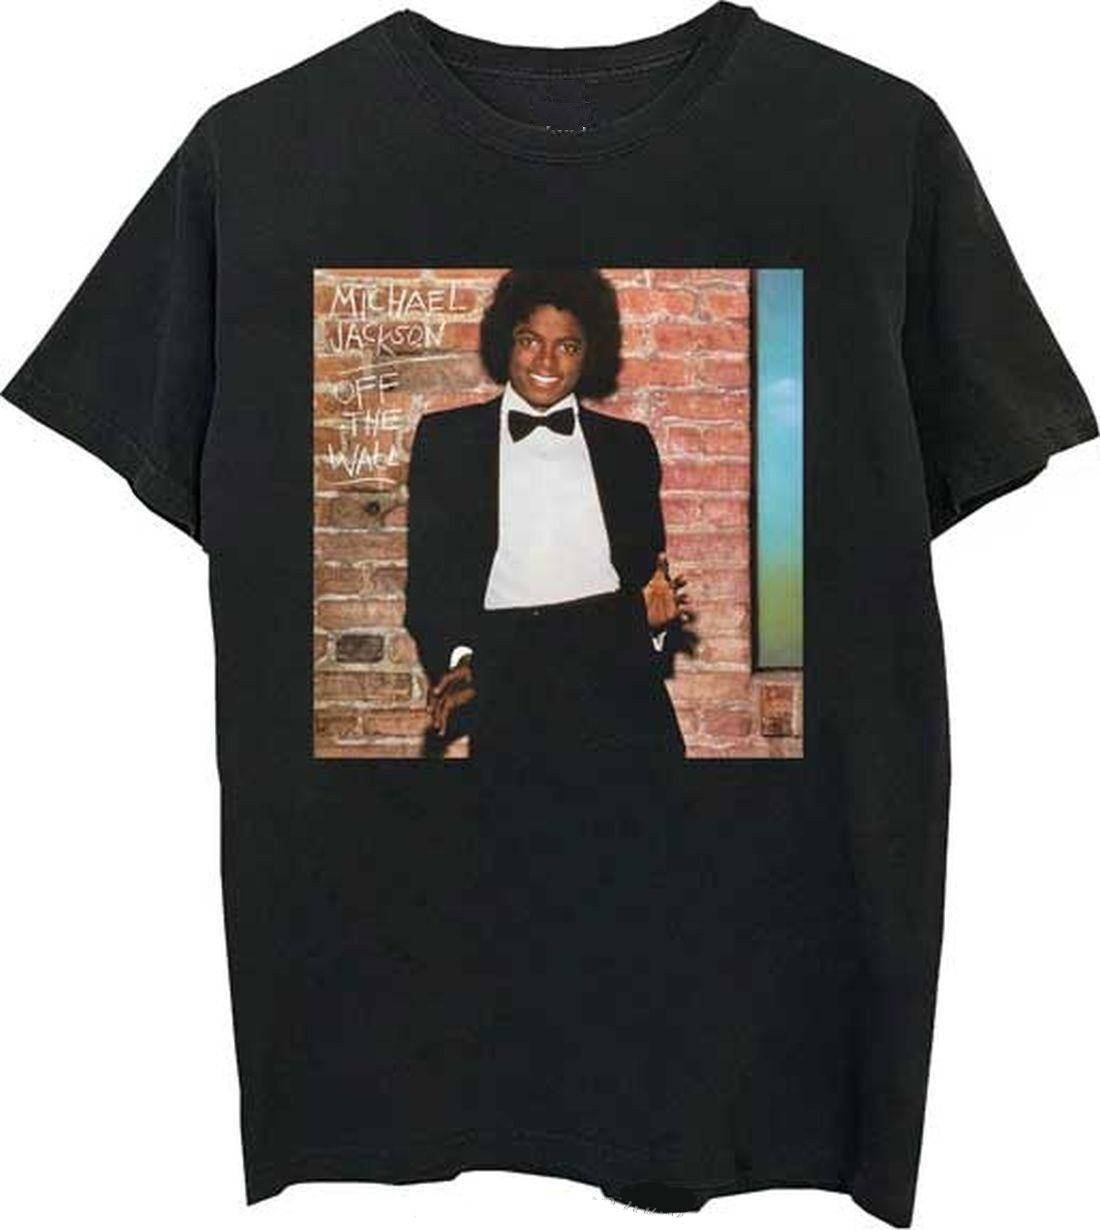 Michael Jackson Off The Wall T-Shirt All Sizes New Michael Jackson Top Quality Cotton Casual Men T Shirts Men harajuku